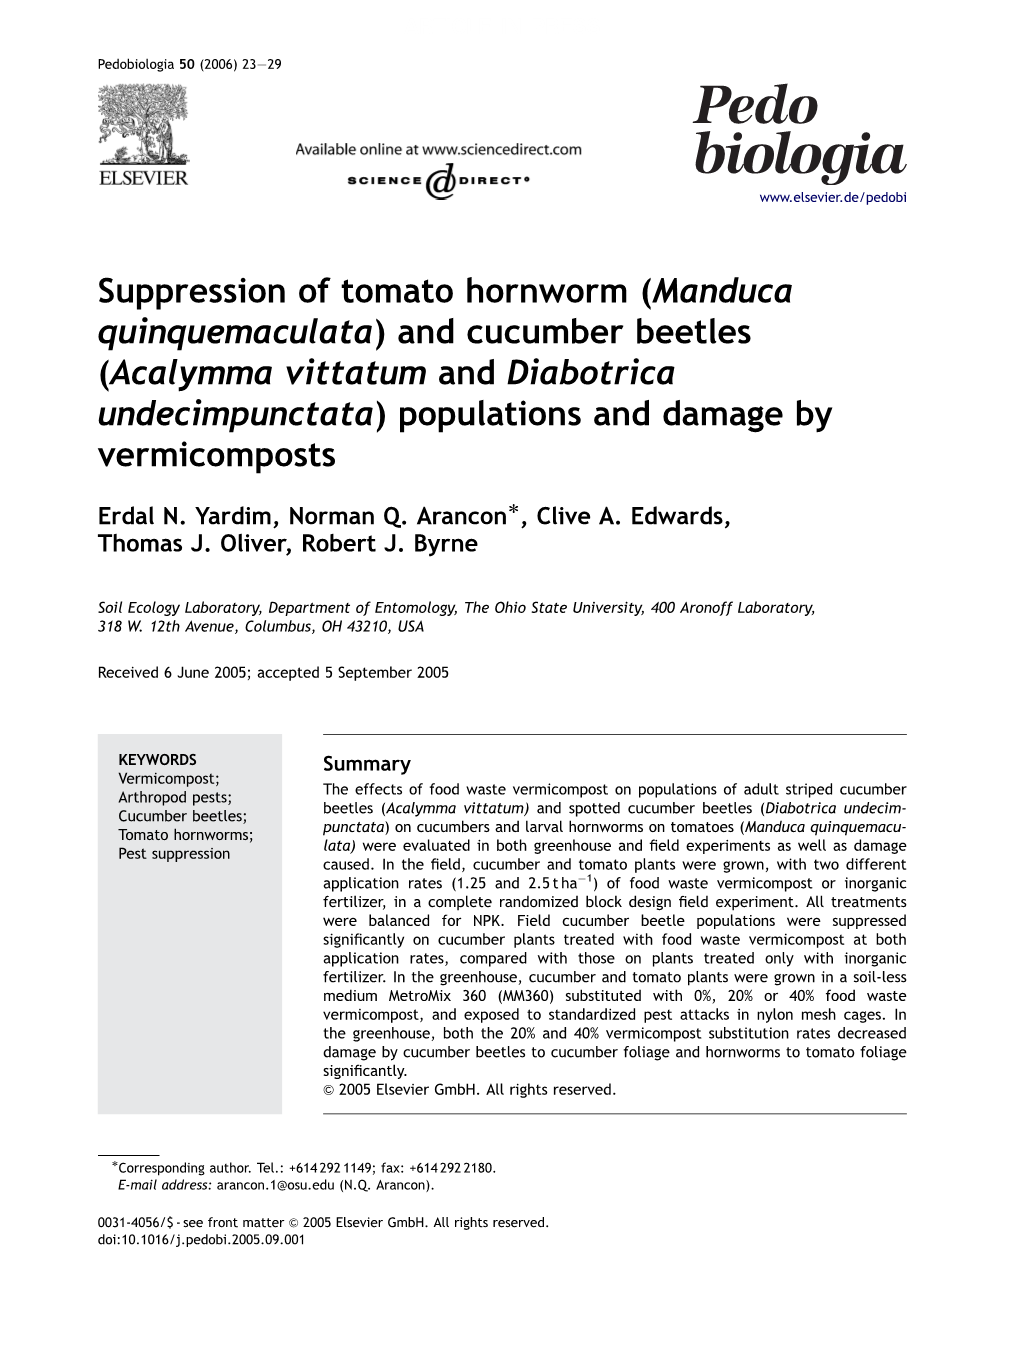 Suppression of Tomato Hornworm